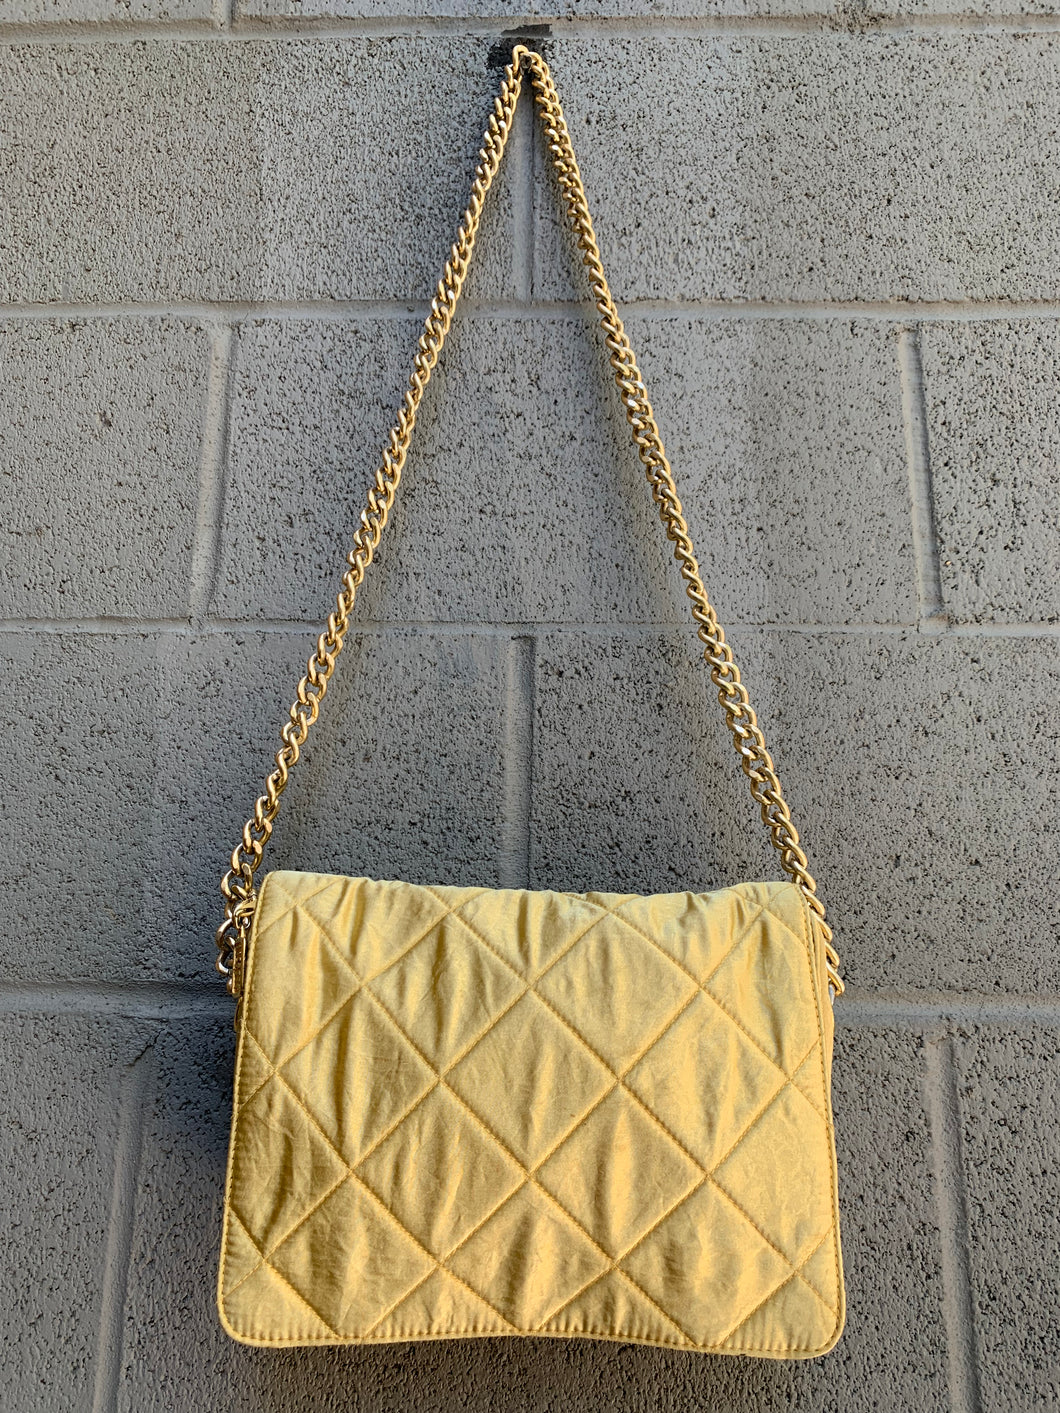 1980’s gold quilt chain purse